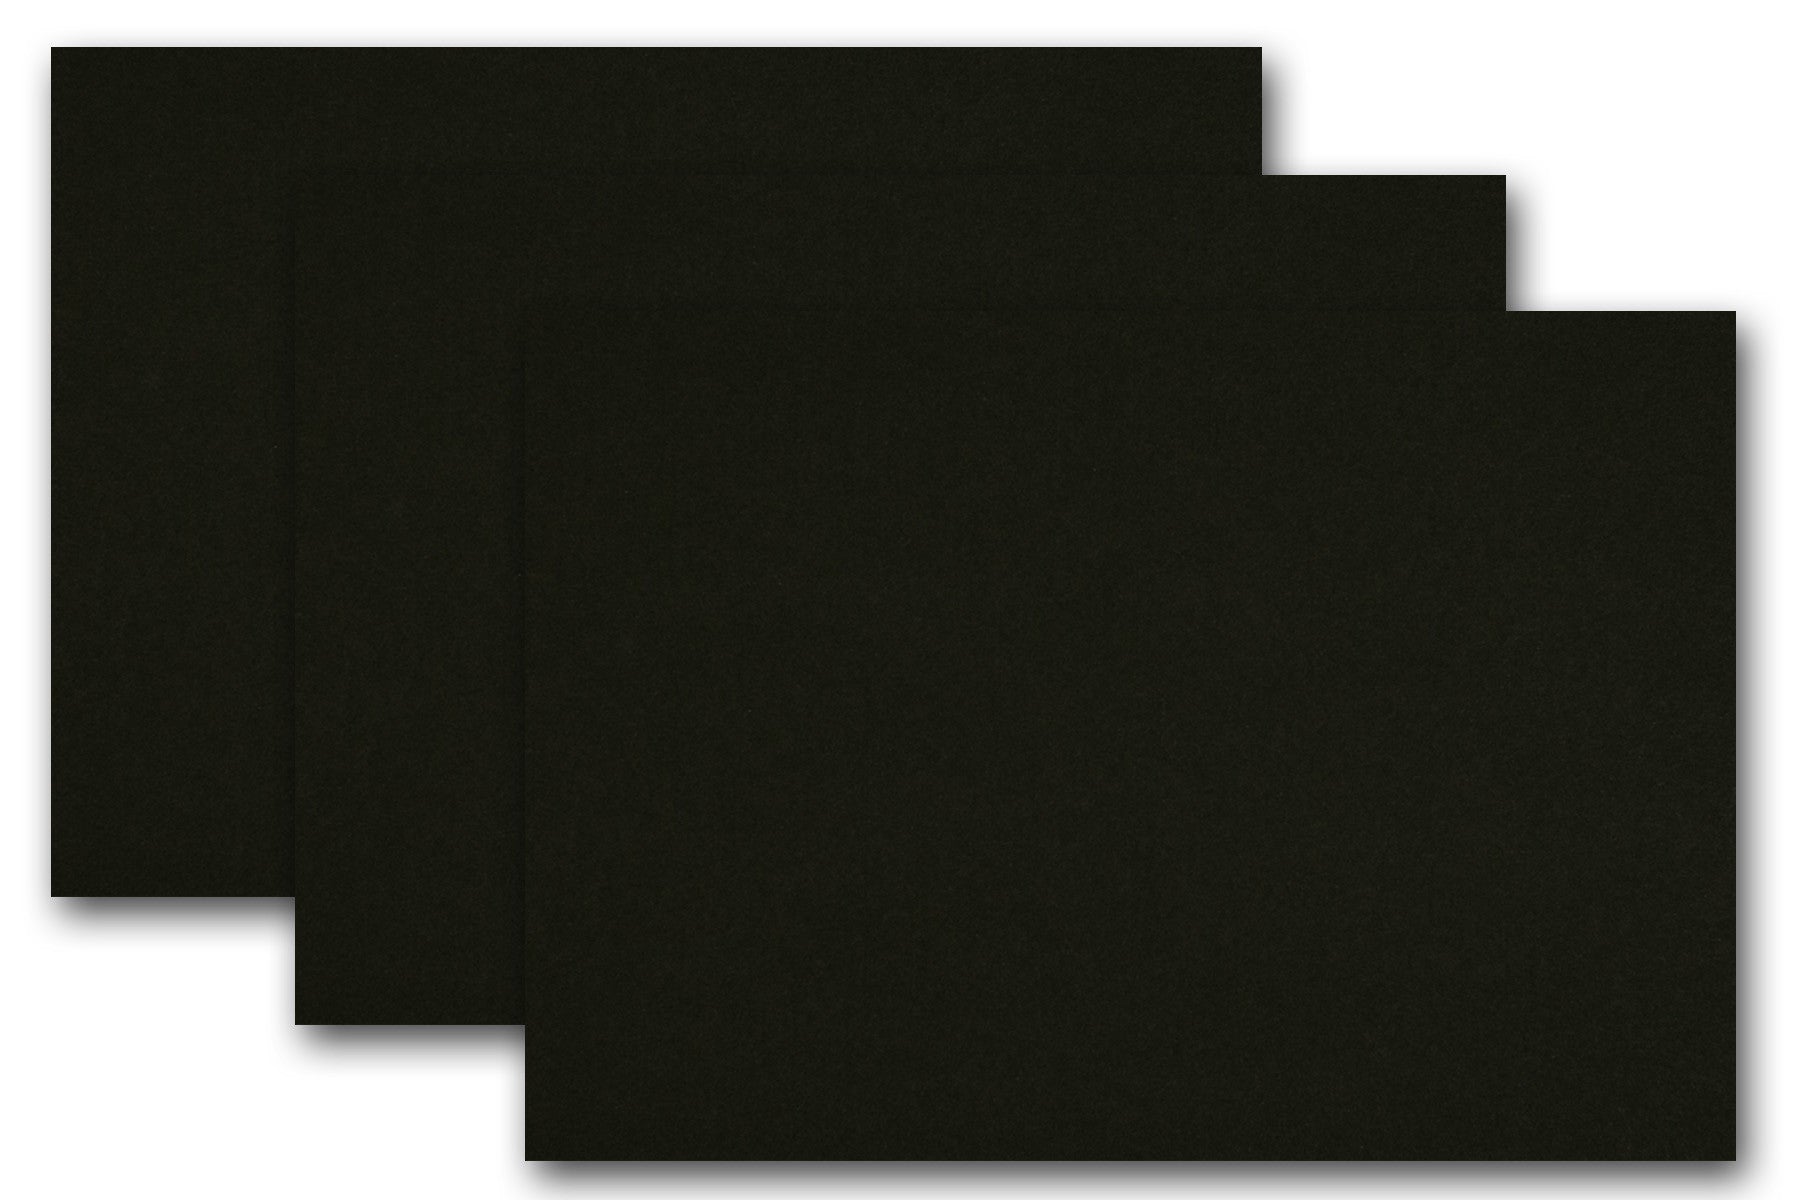 Basic DARK BROWN Card Stock Paper - 8.5 x 11 - 100lb Cover (270gsm